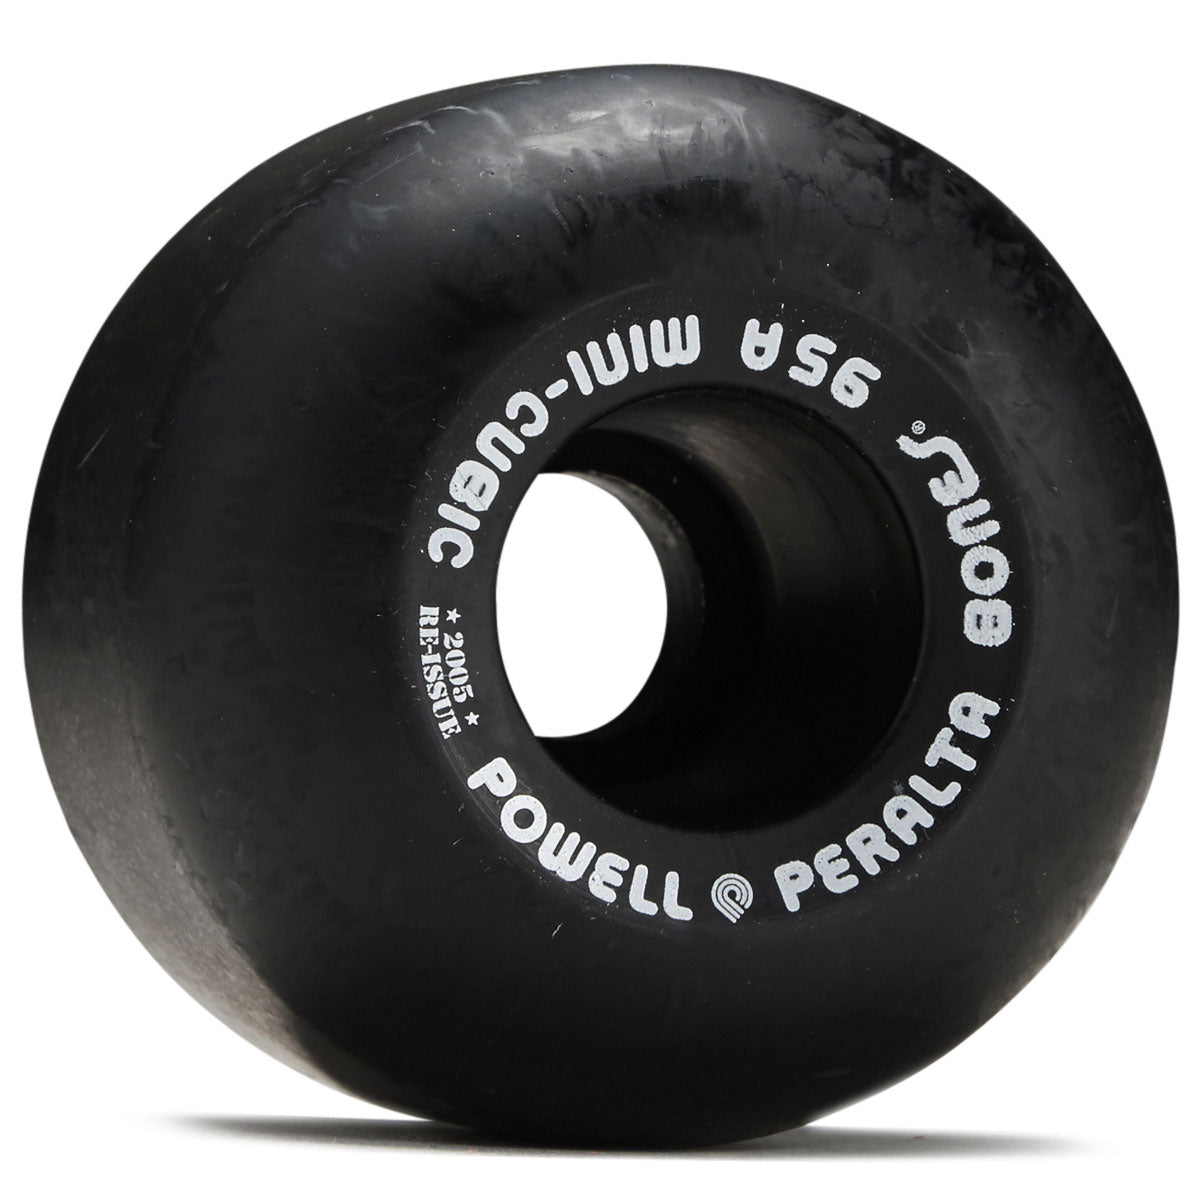 Powell Peralta Mini Cubics 95A Skateboard Wheels - Black - 64mm image 1